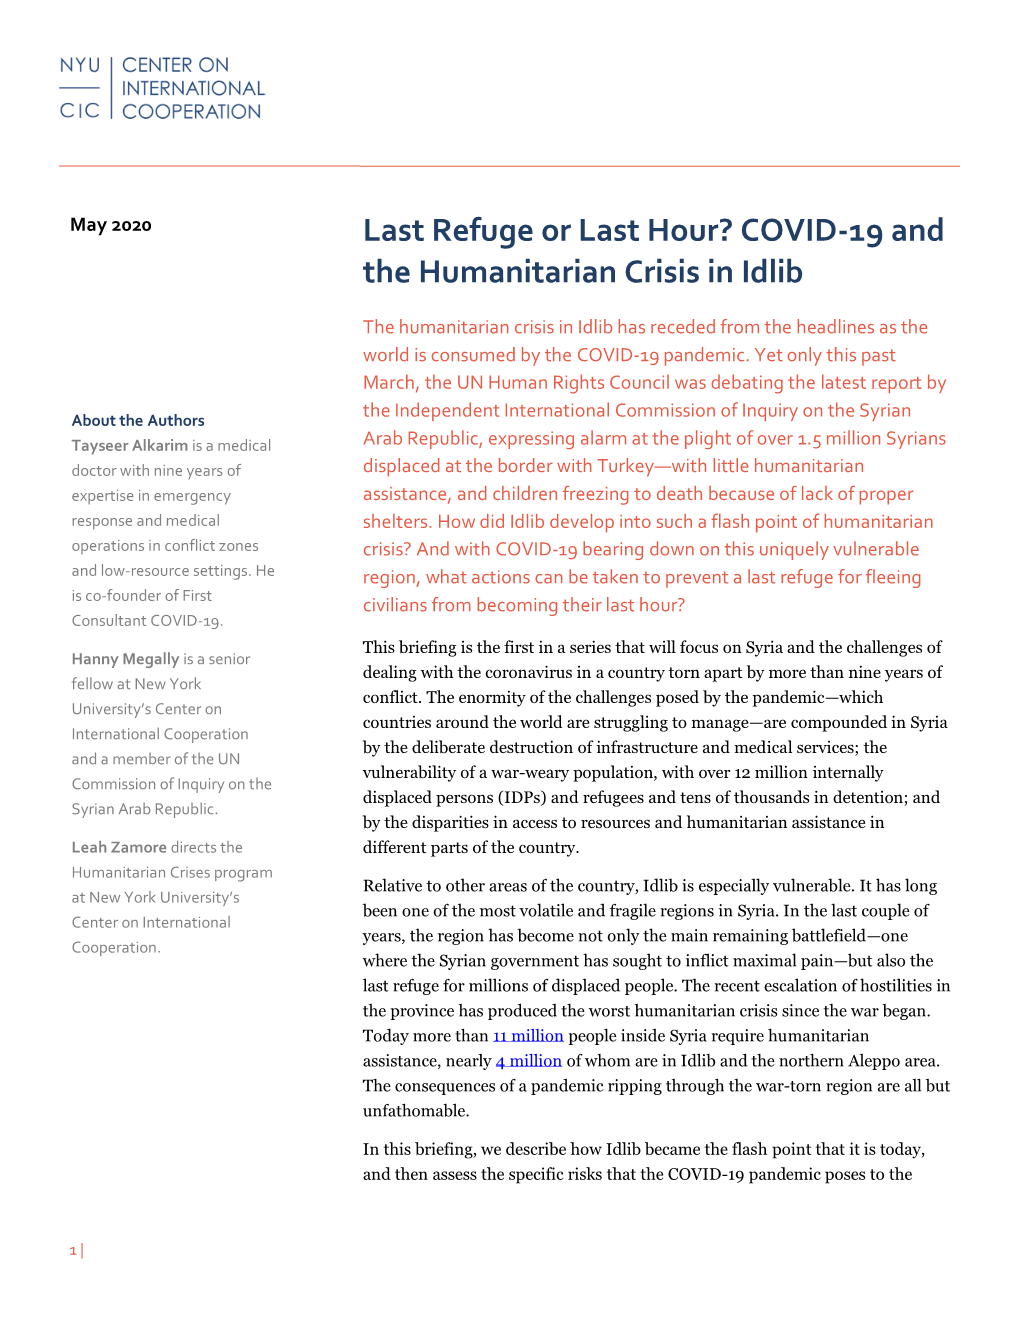 COVID-19 and the Humanitarian Crisis in Idlib